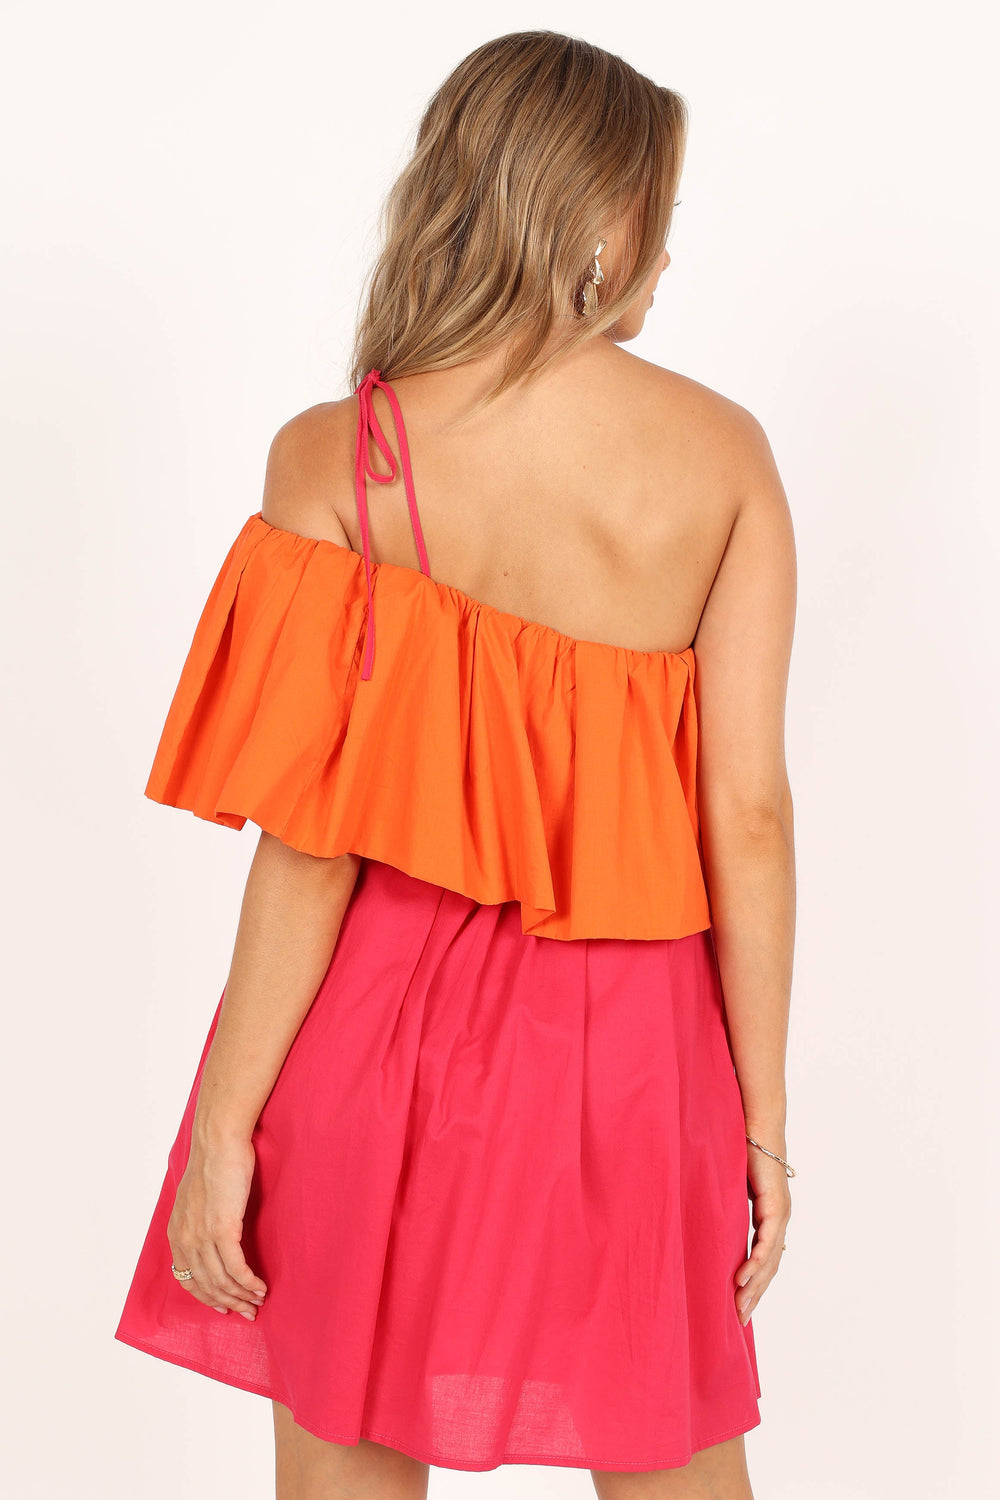 Maeva One Shoulder Mini & Petal - USA Dress Pup Pink/Orange 